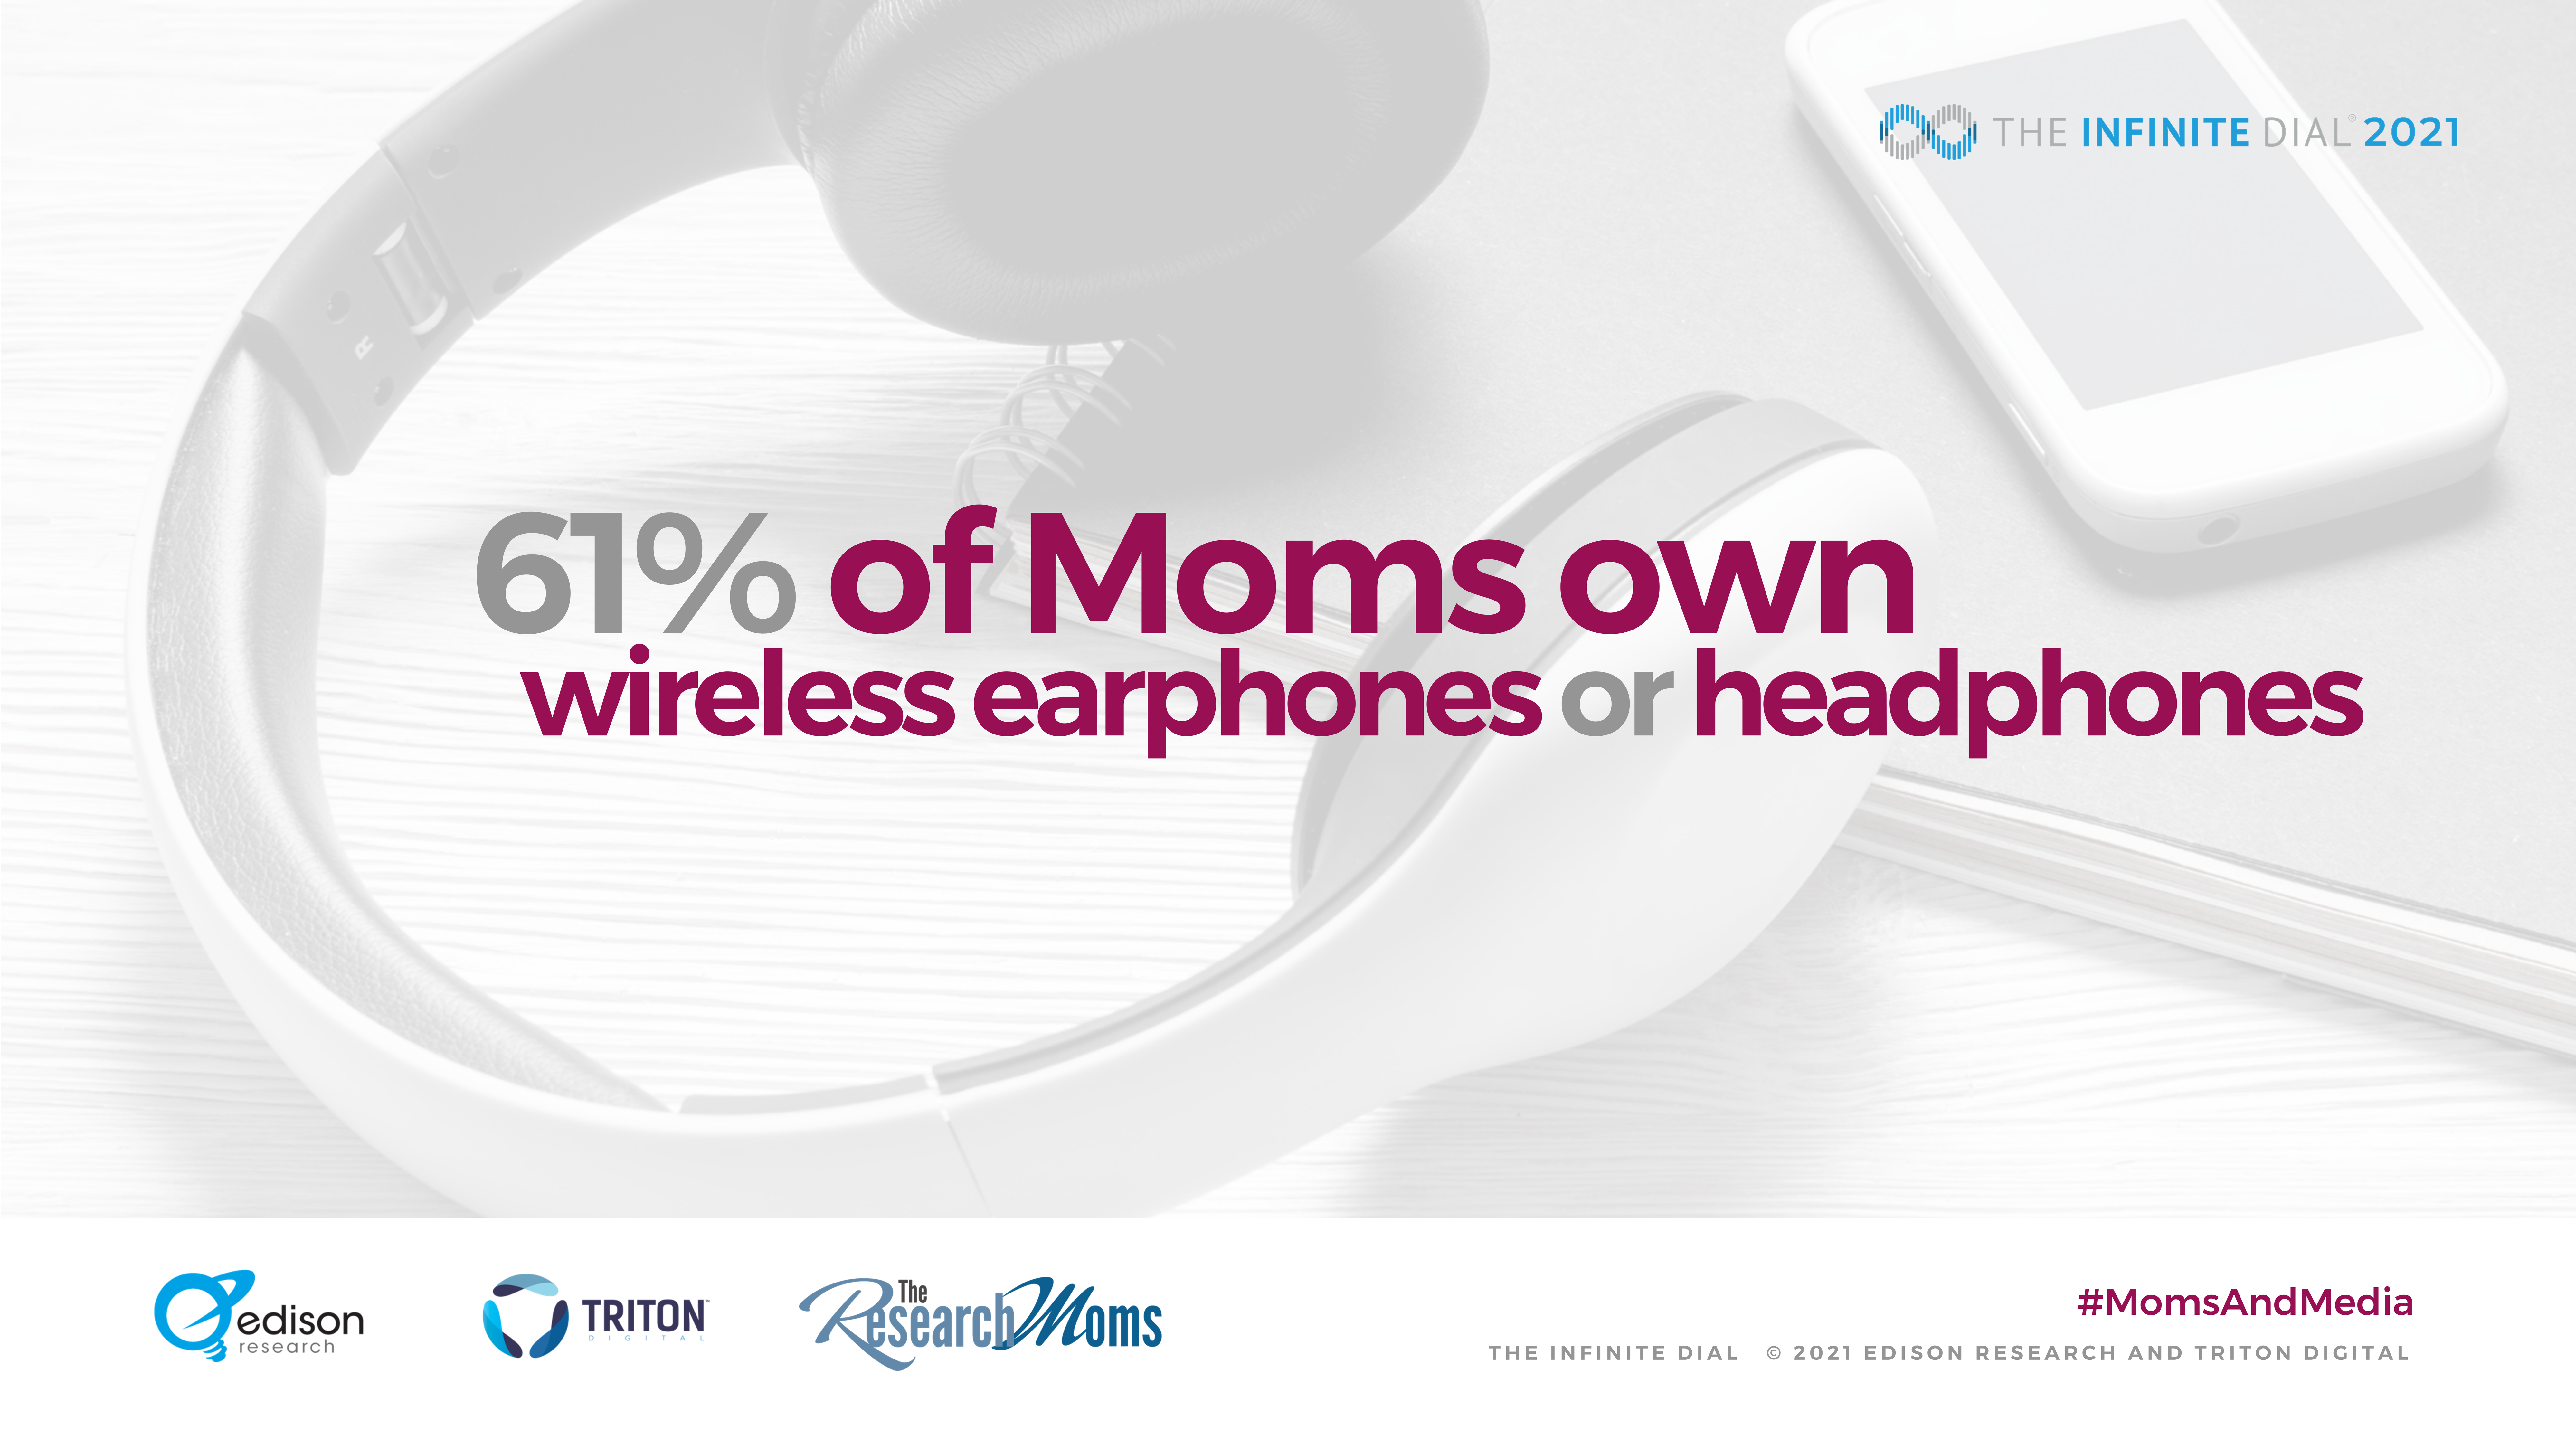 Moms own wireless earphones